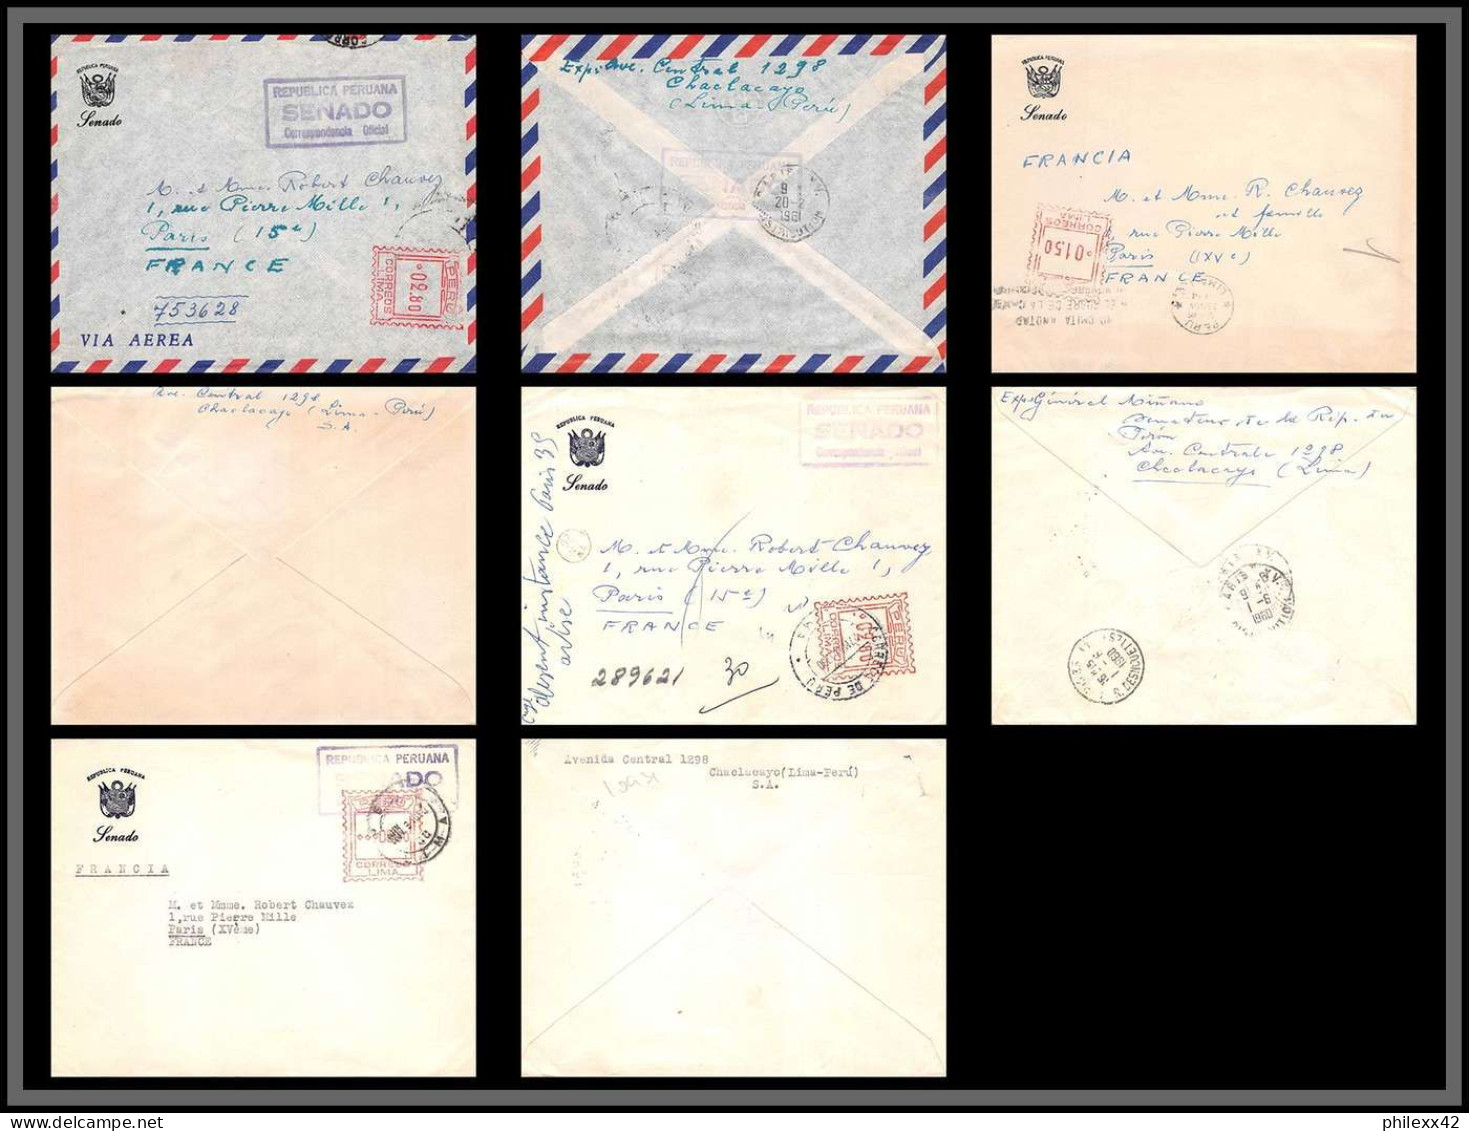 10931 SENADO CORRESPONDENCIA OFICIAL 1960 Lettre Cover Perou Peru  - Peru